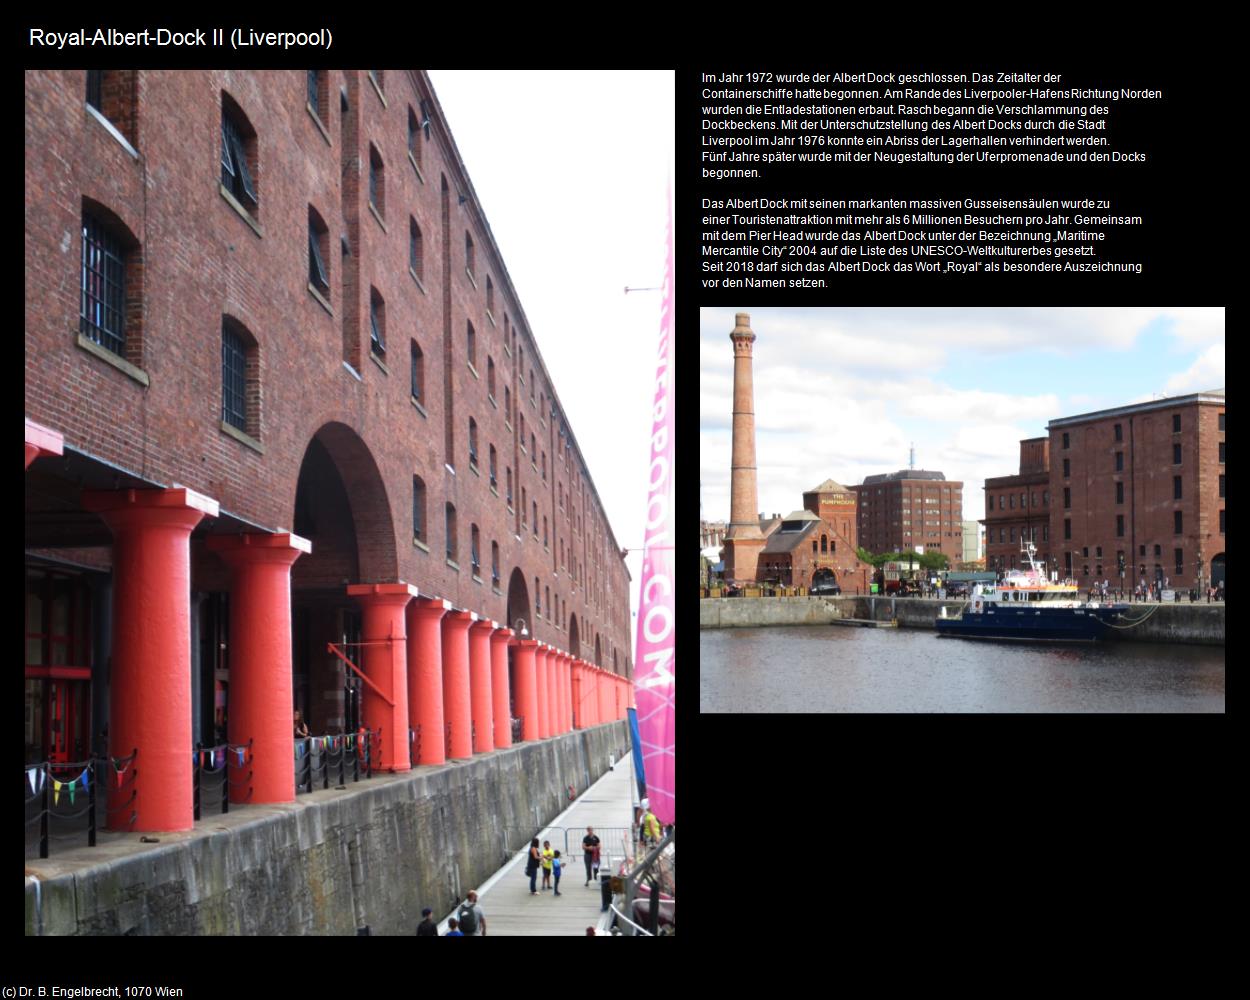 Royal-Albert-Dock II  (Liverpool, England) in Kulturatlas-ENGLAND und WALES